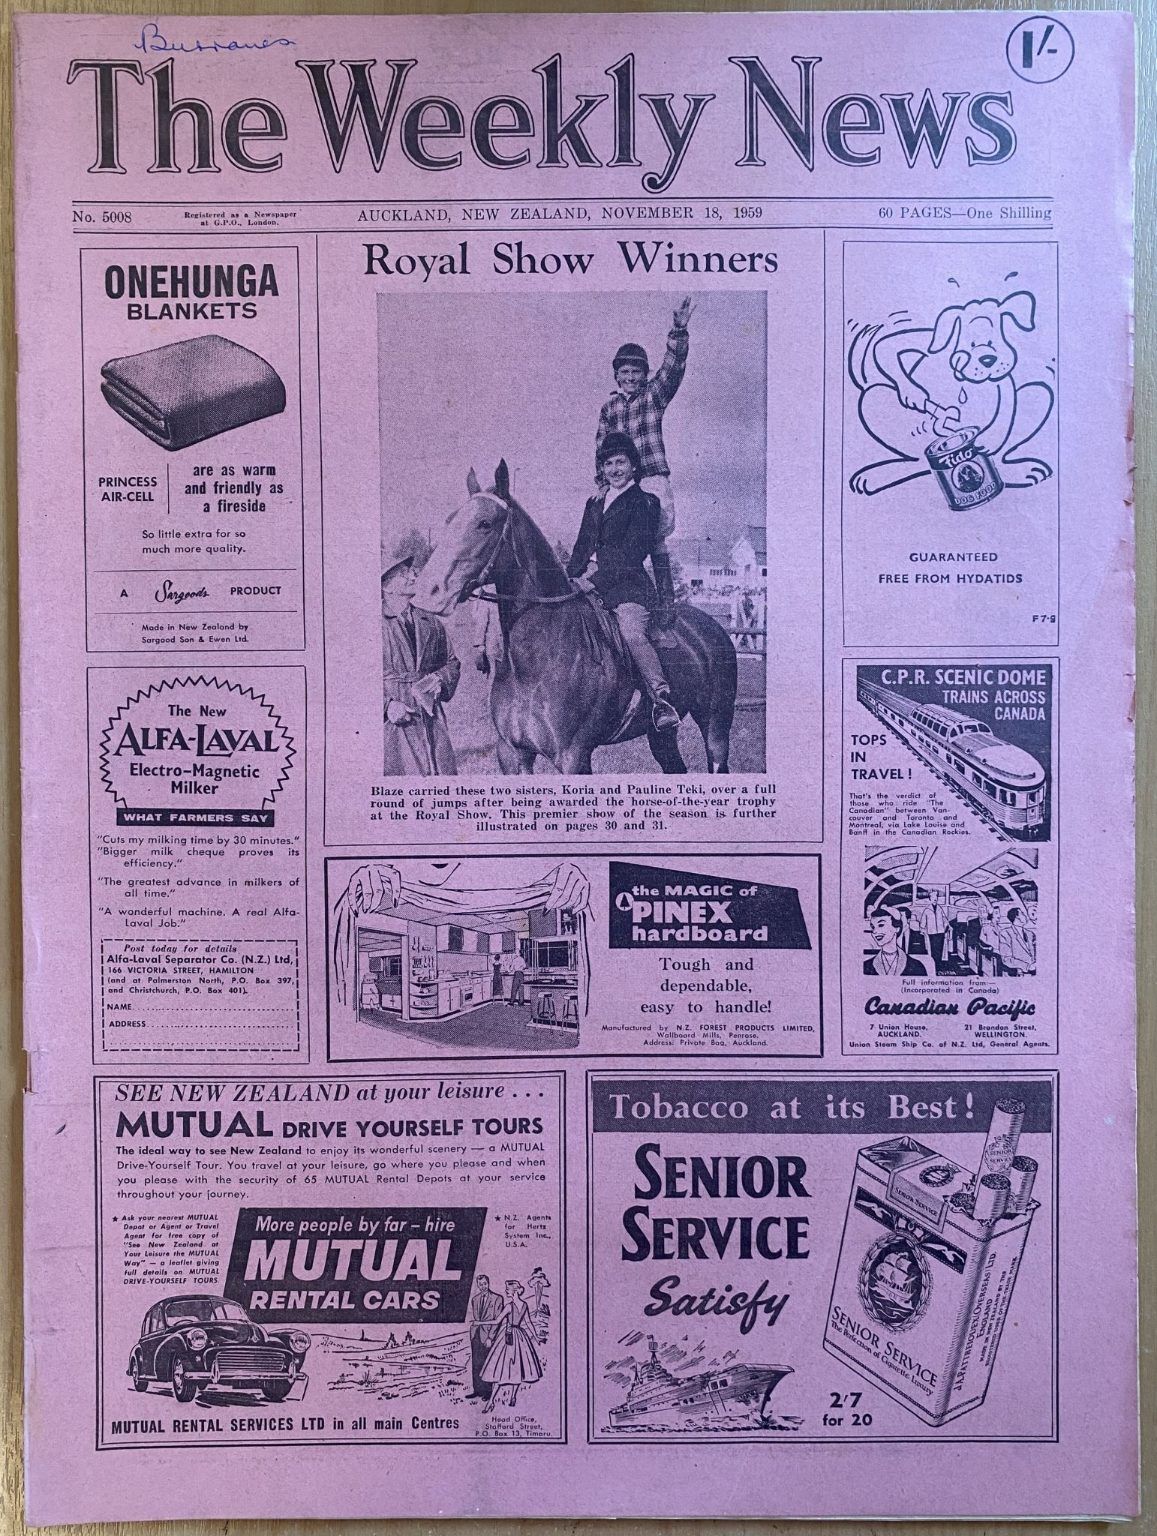 OLD NEWSPAPER: The Weekly News - No. 5008, 18 November 1959